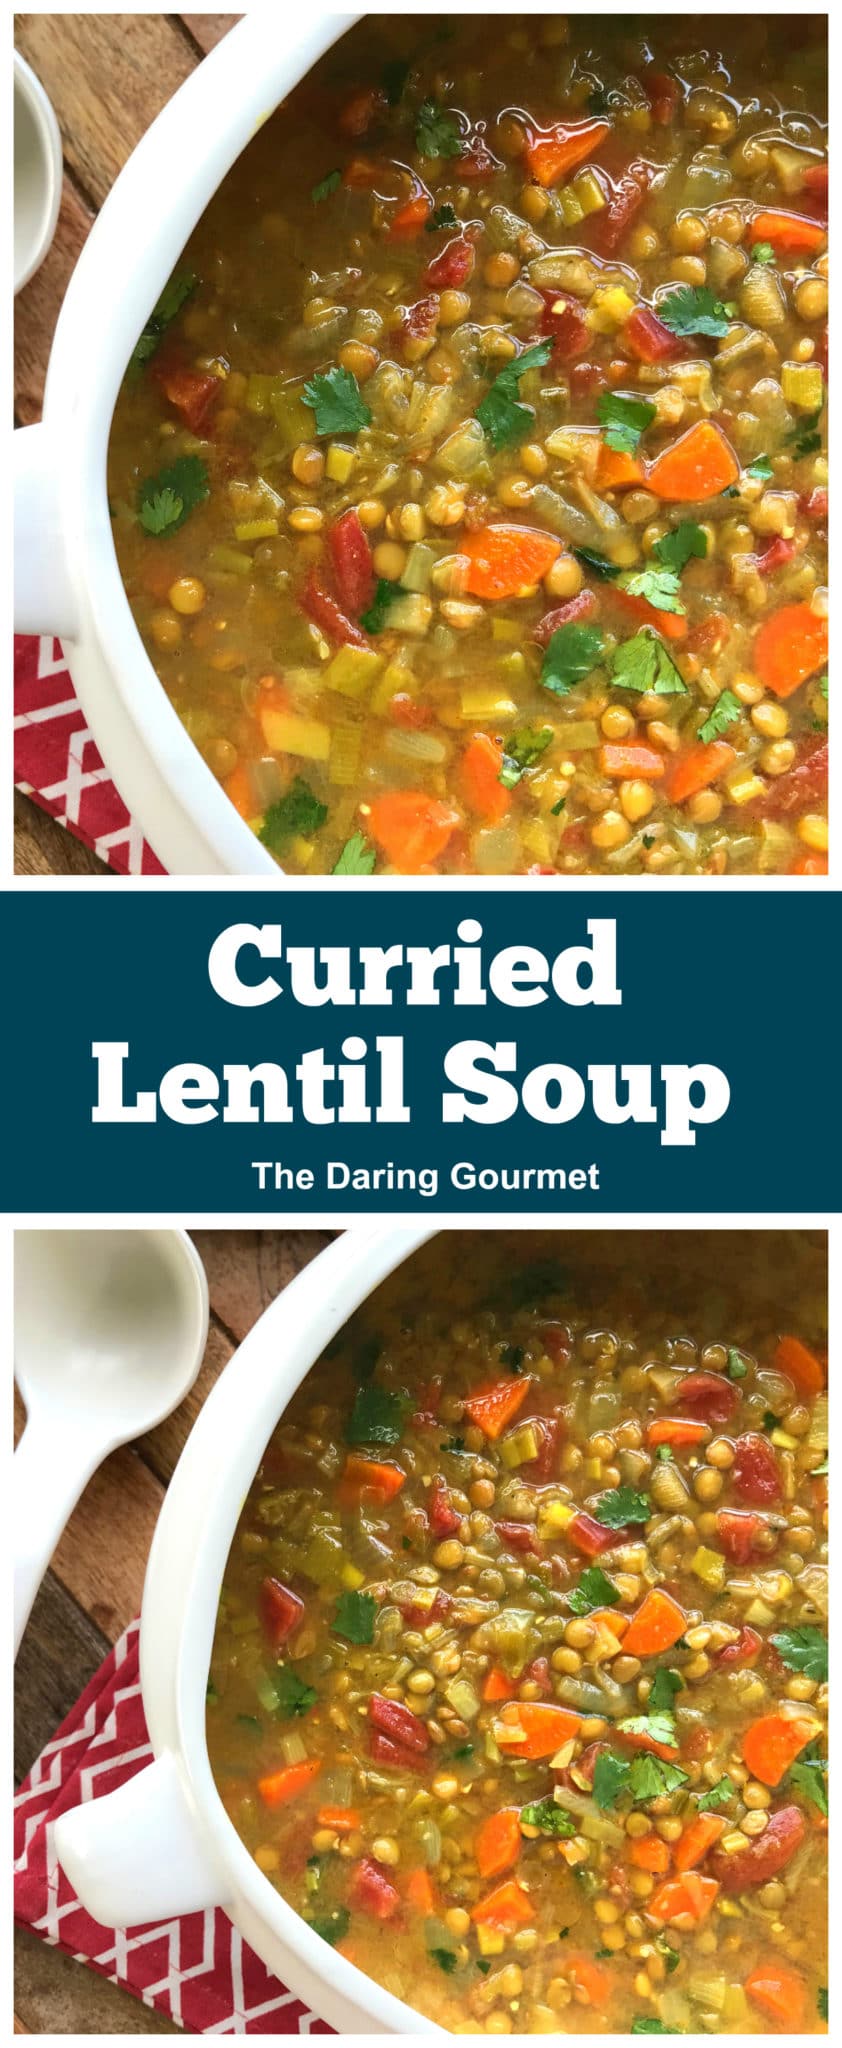 curried lentil soup recipe best healthy vegetarian vegan gluten free